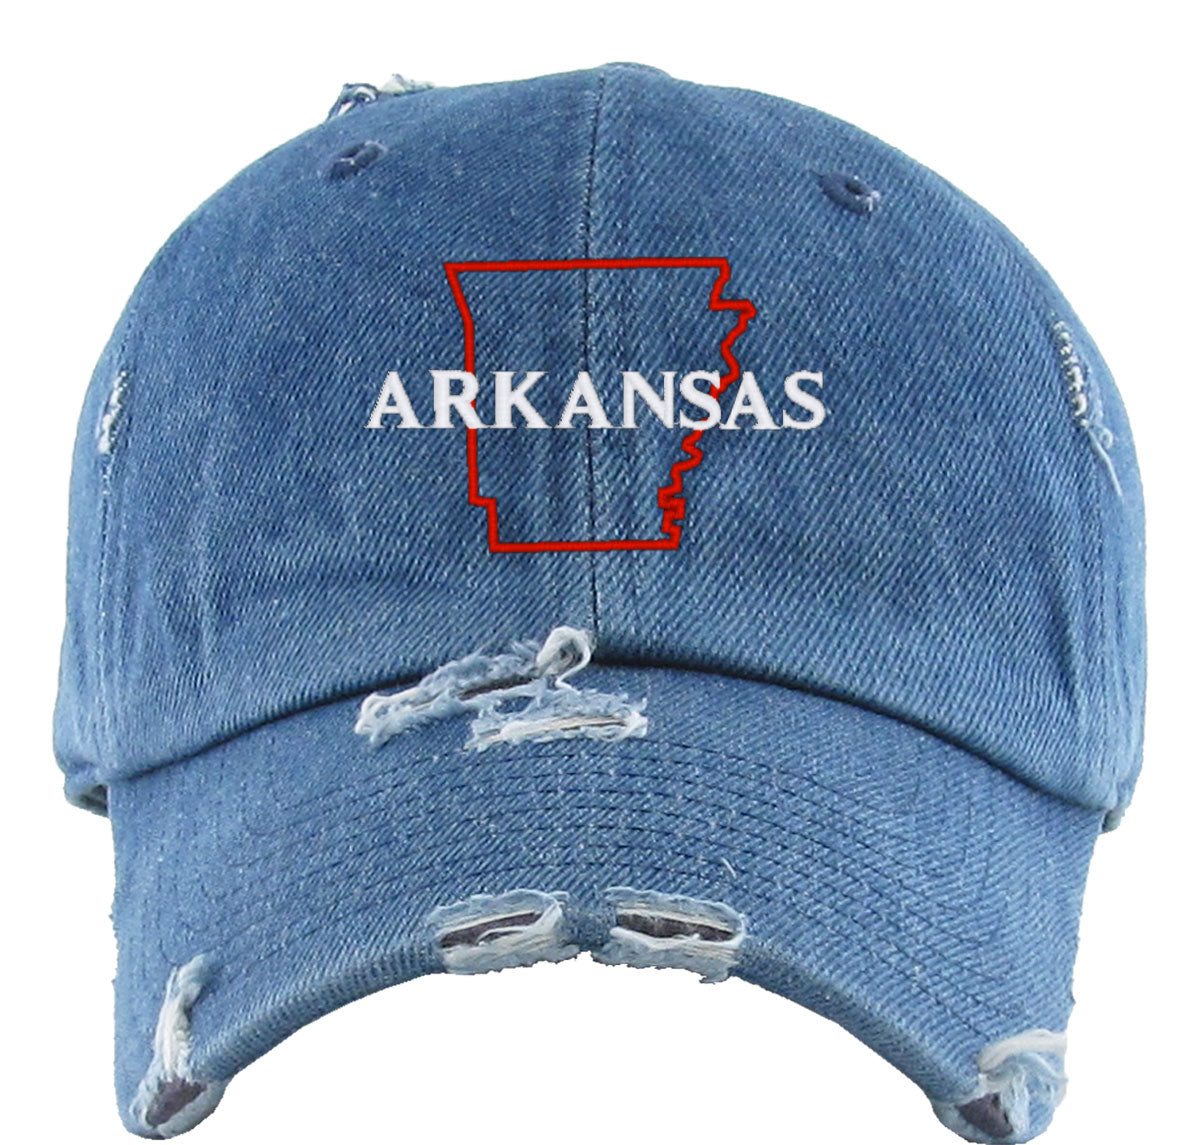 Arkansas Vintage Baseball Cap